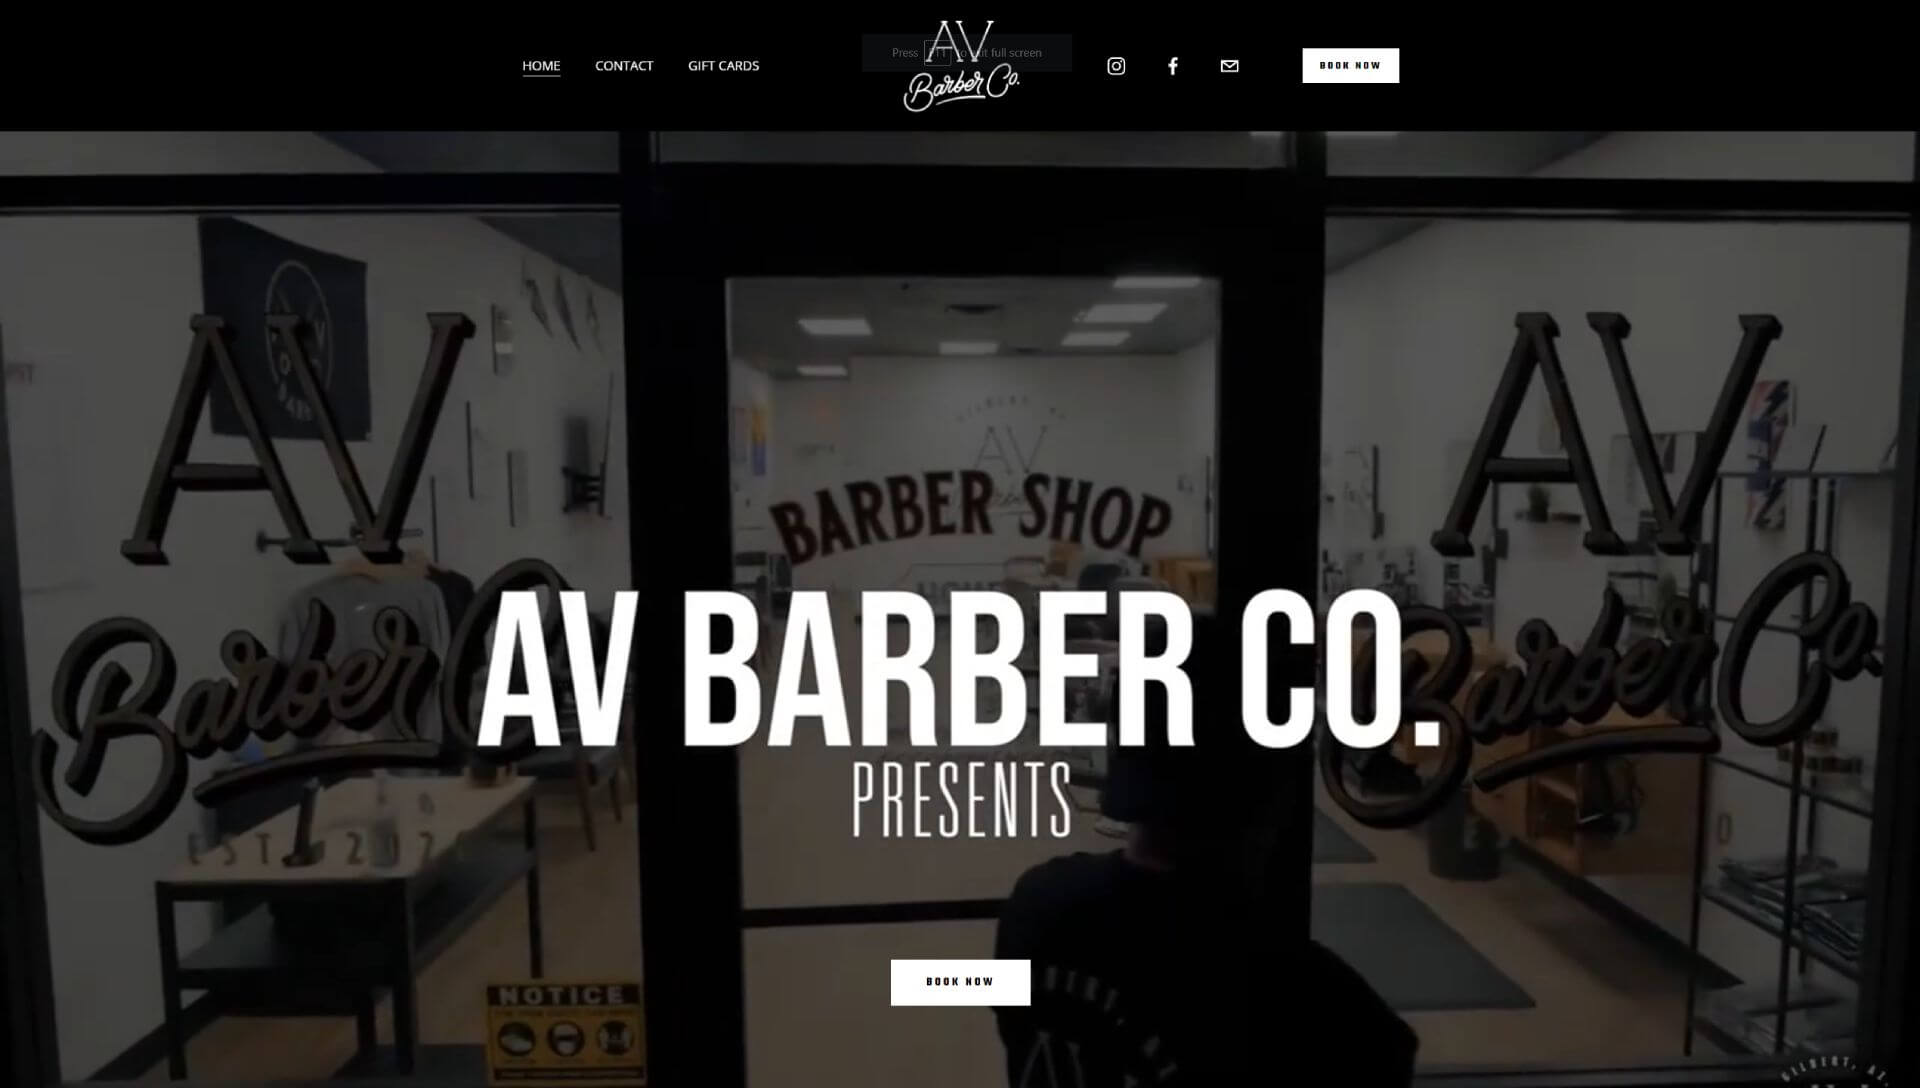 AV Barber Co. - Sidekick Creative - Building Strong Online Presence for Small Business Success - Small business website design | Custom website solutions | Branding and identity | Website maintenance and updates